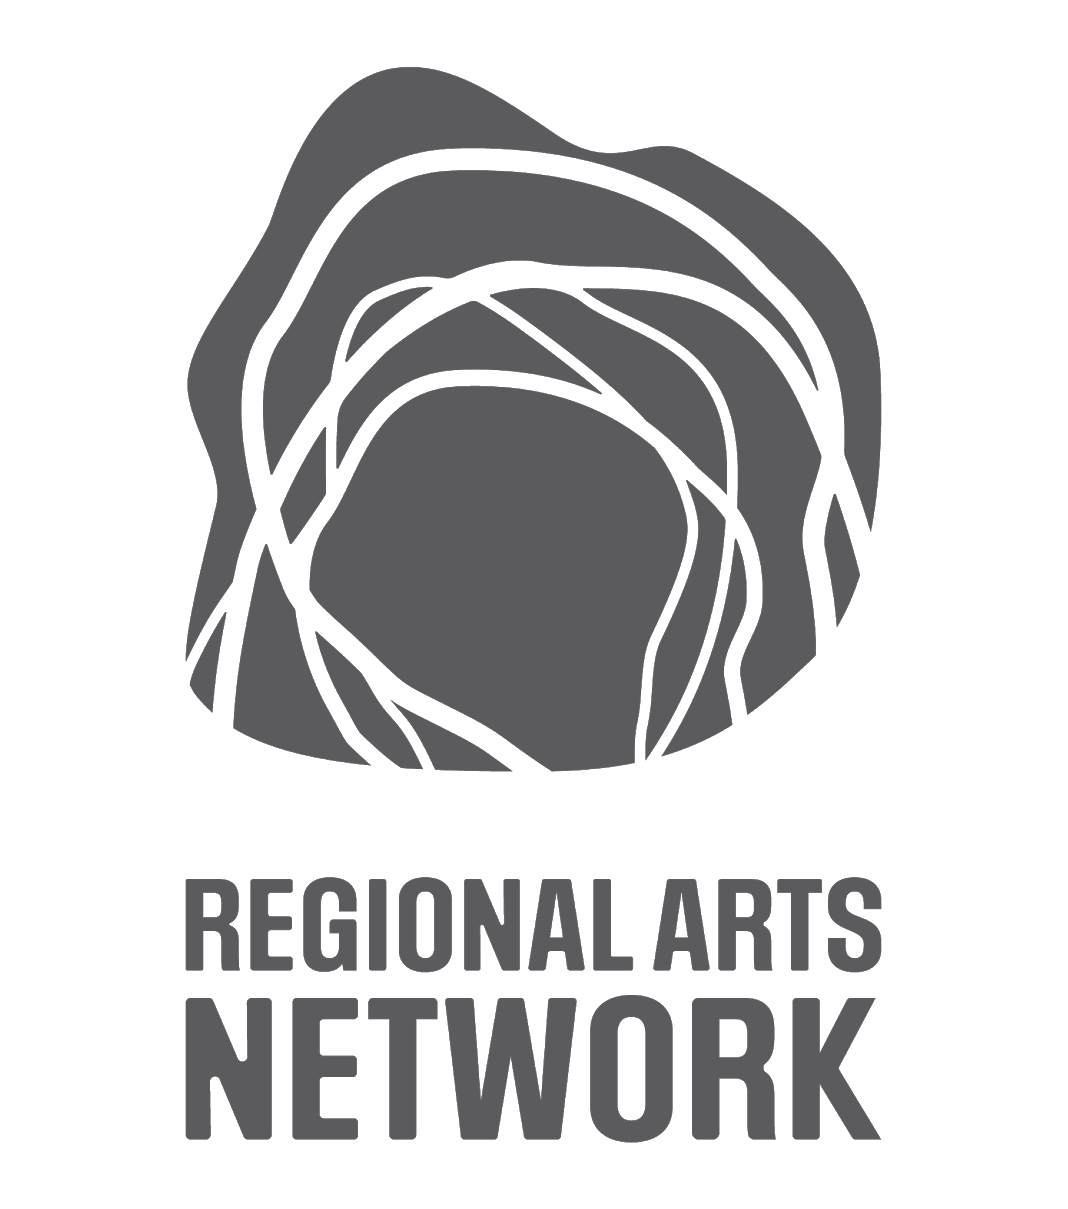 Regional Arts Network